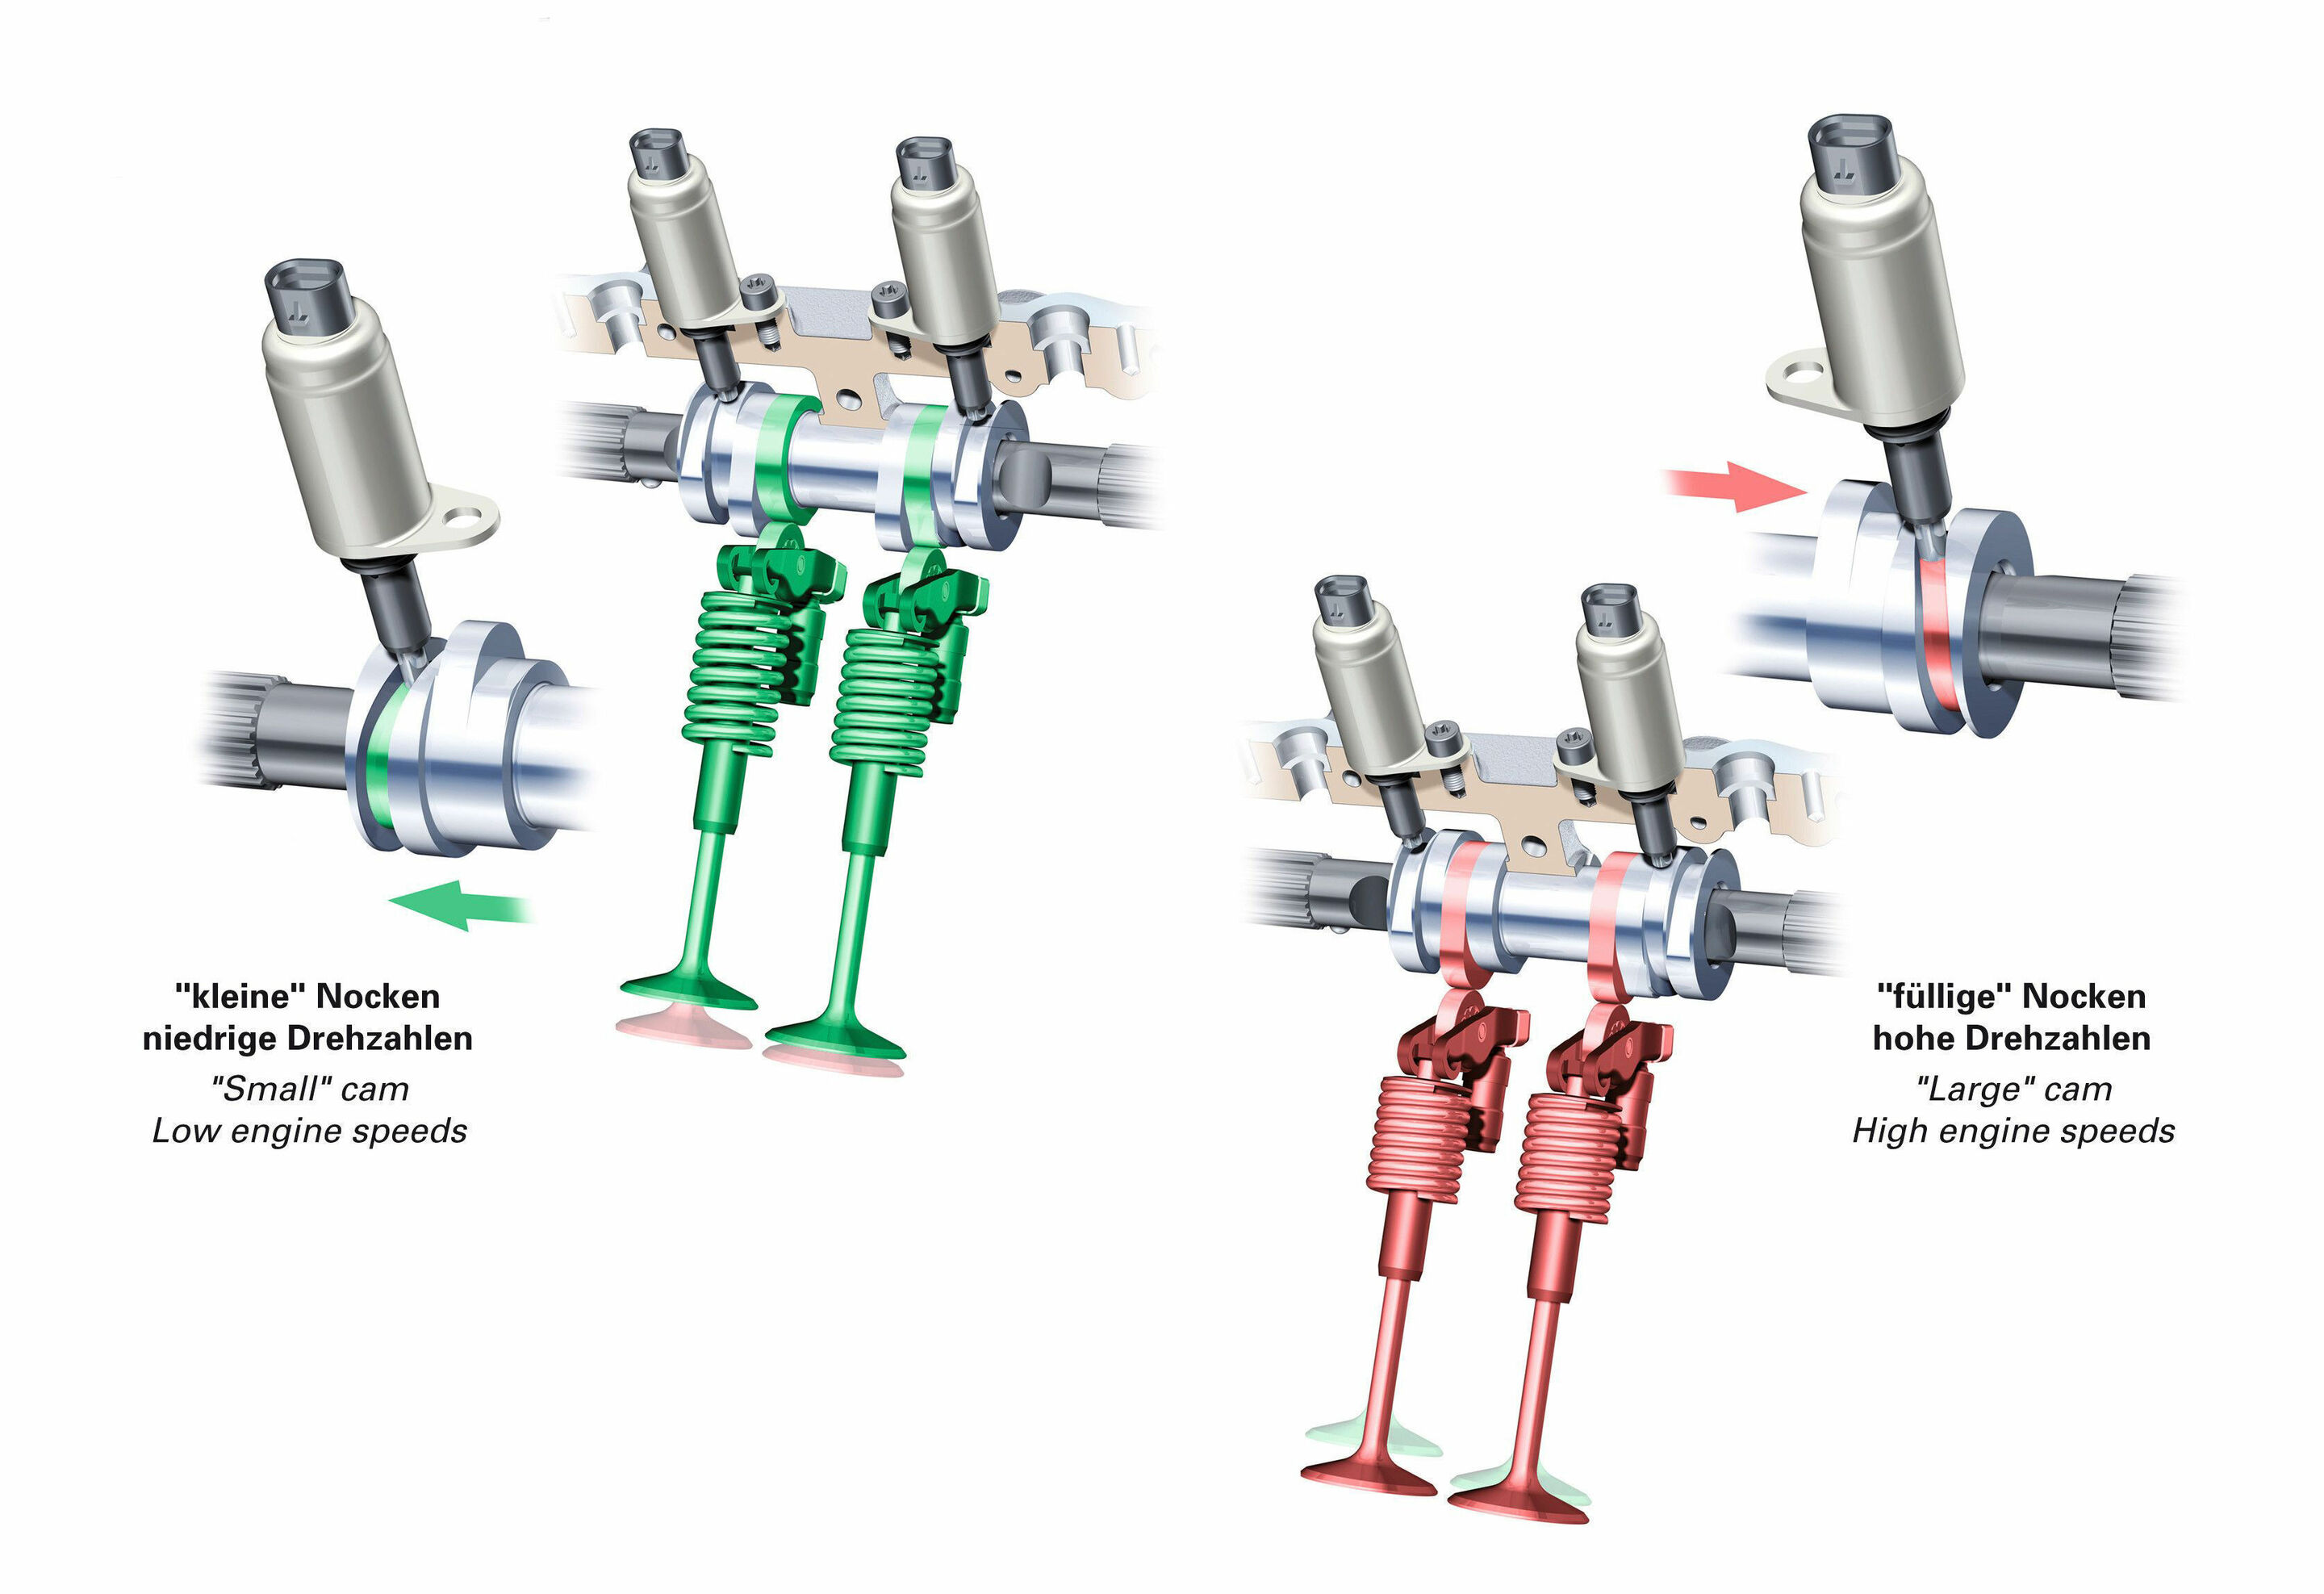 Audi valvelift system (AVS)